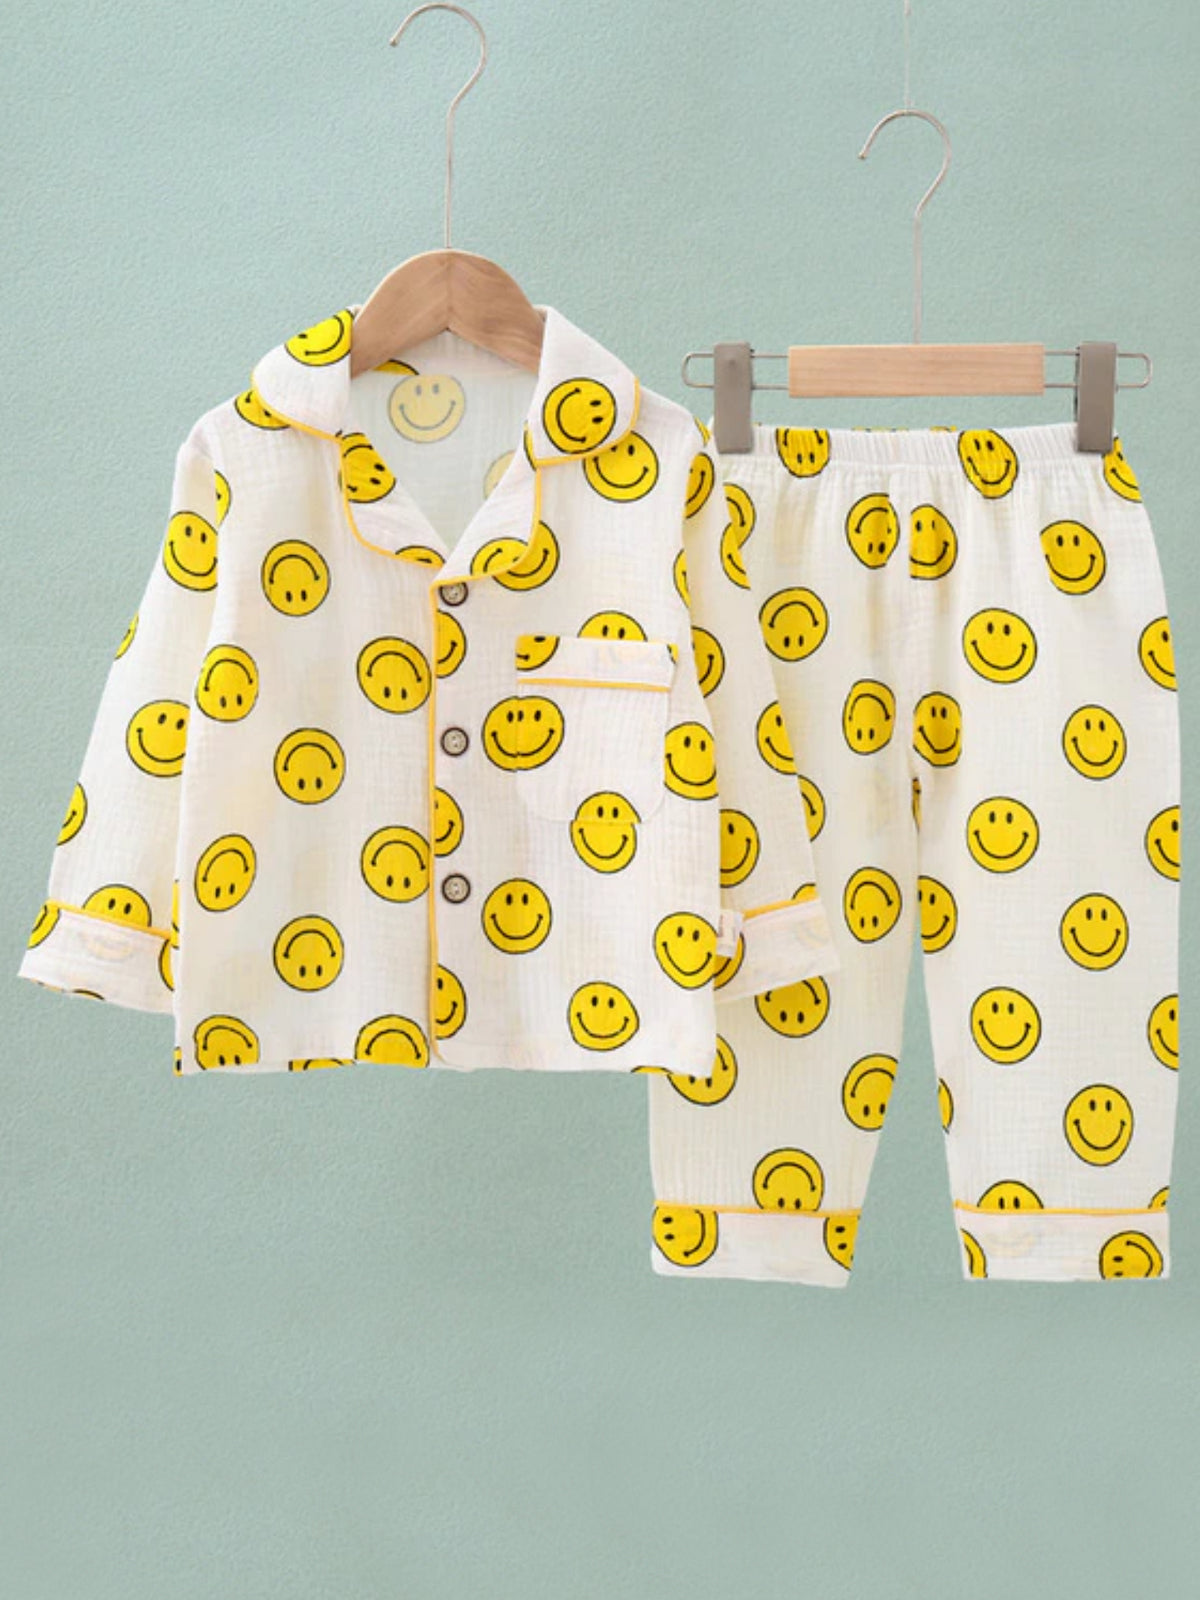 Mia Belle Girls Multicolor Print Pajamas | Girls Loungewear